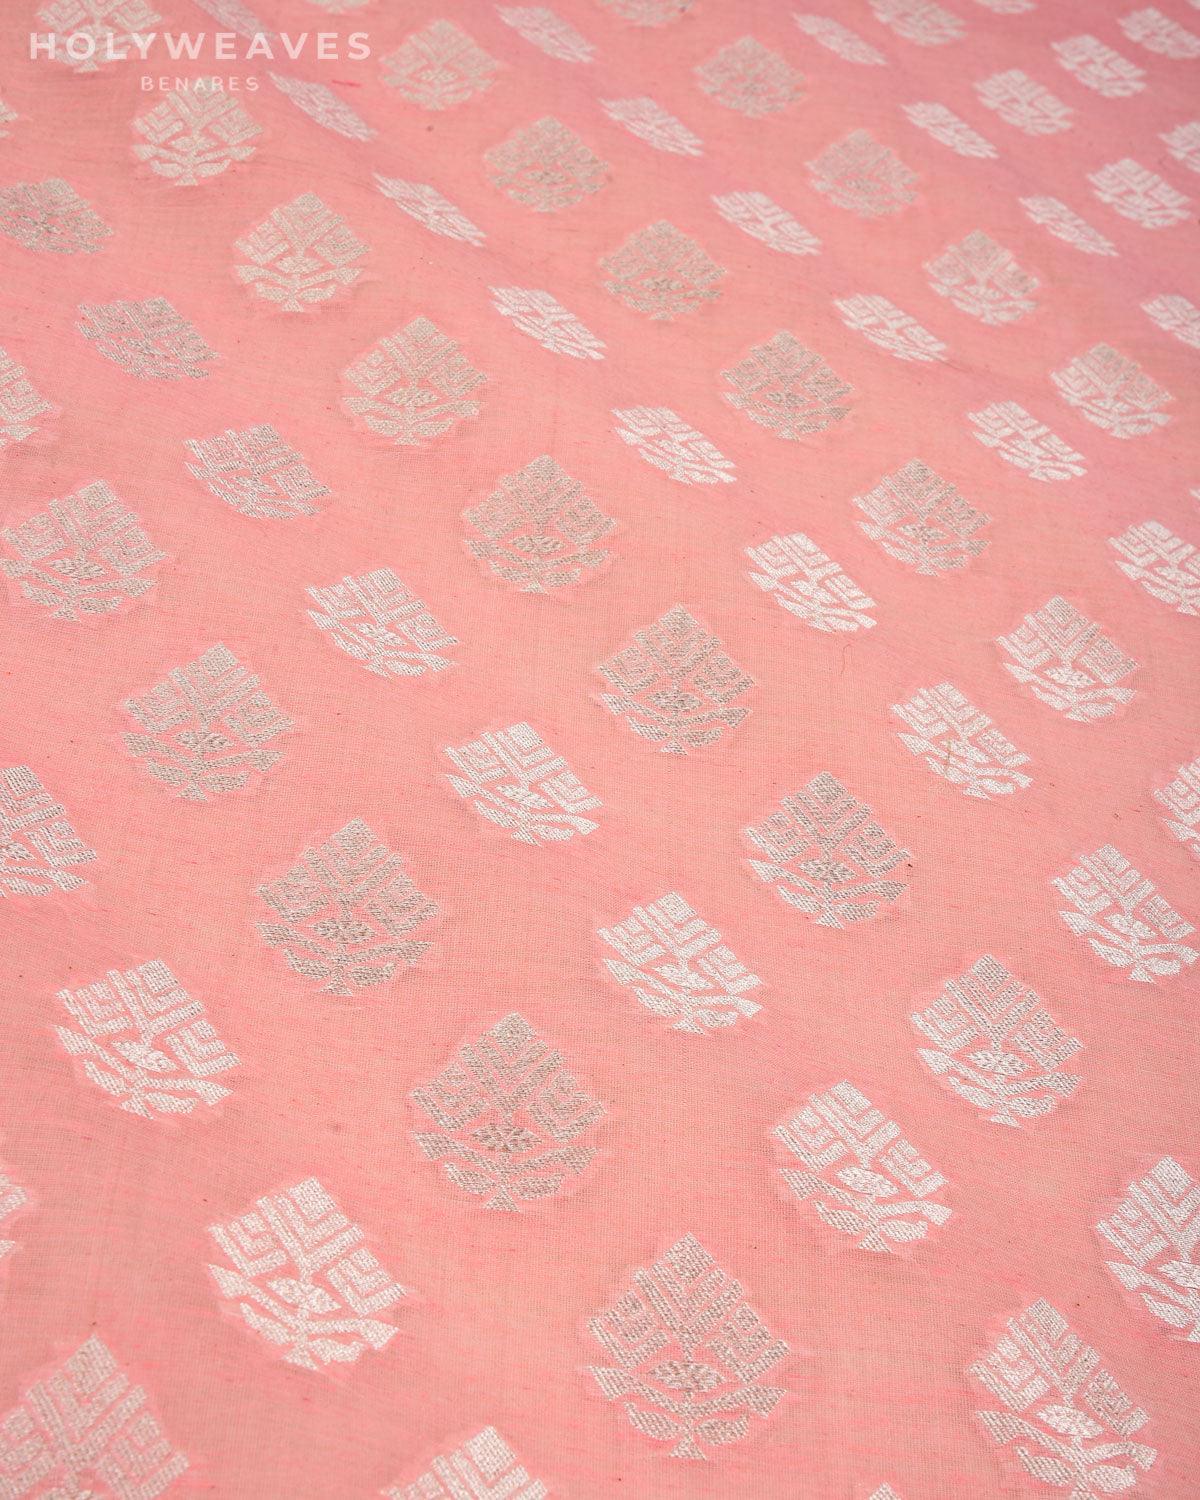 Peach Banarasi Silver Zari Buti Cutwork Brocade Handwoven Cotton Silk Fabric - By HolyWeaves, Benares